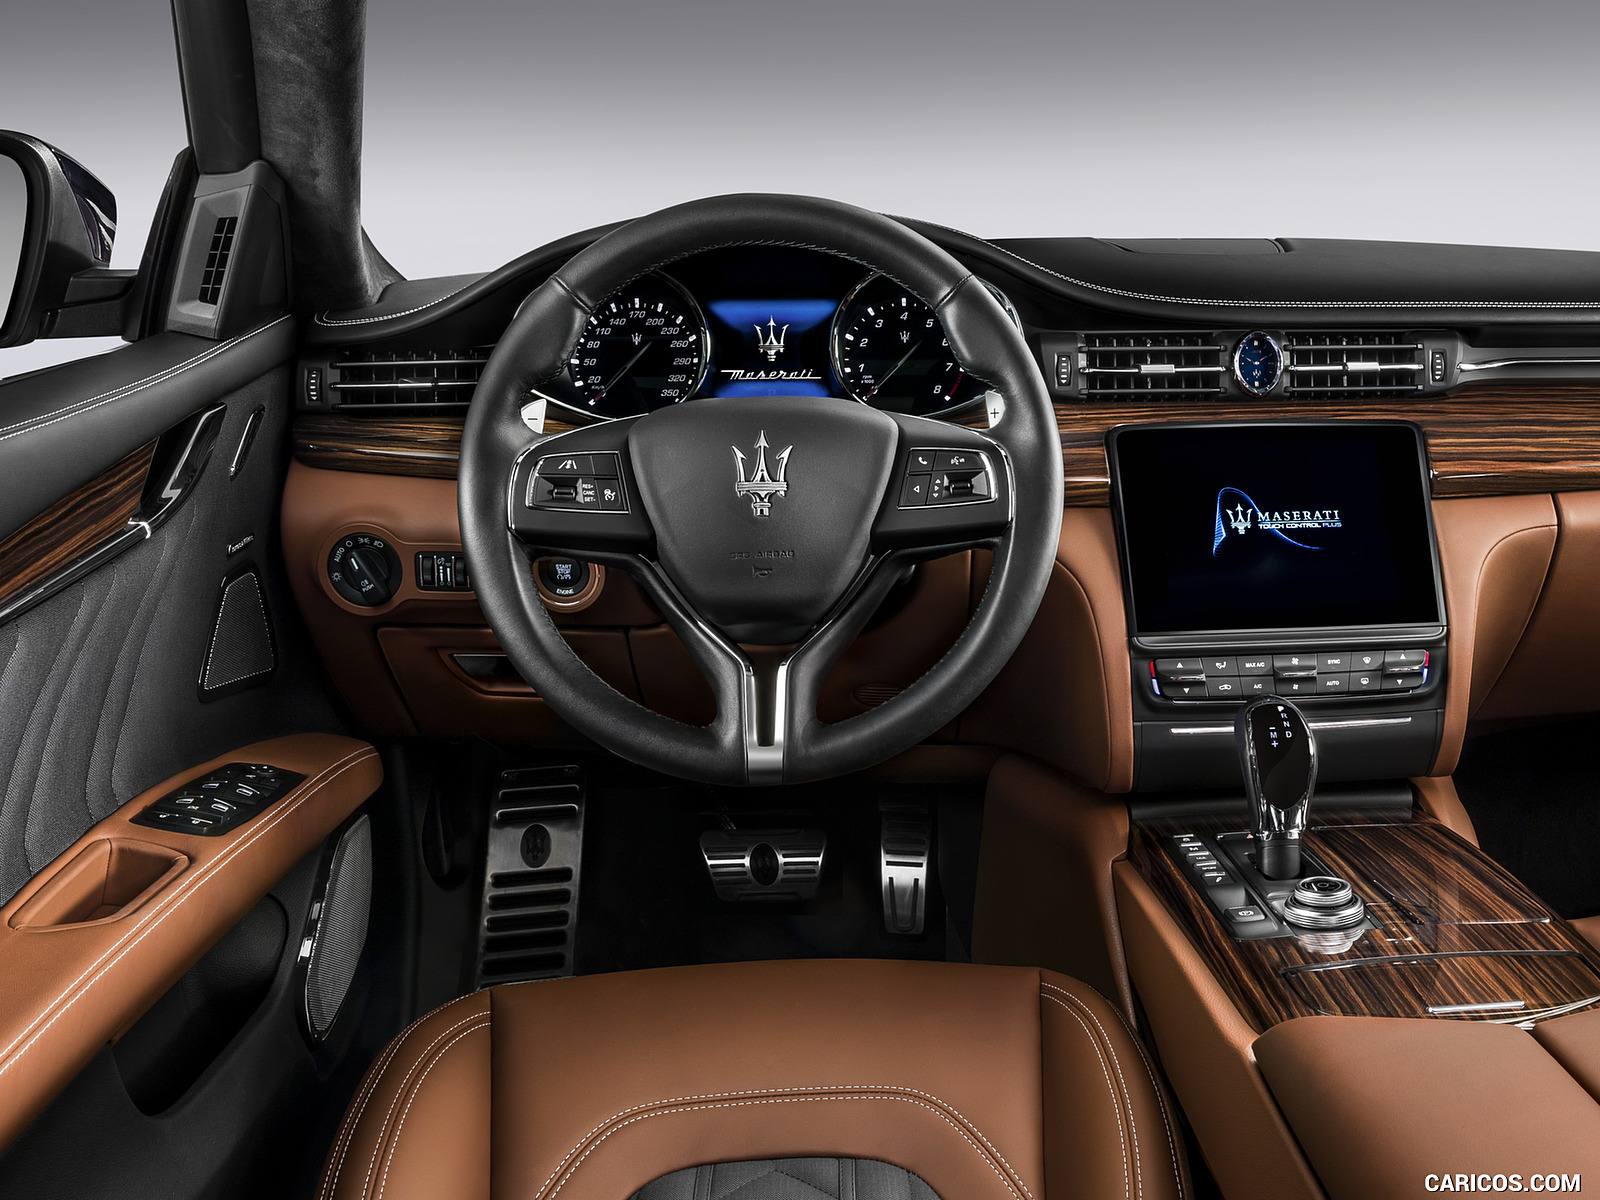 Салон мазерати. Maserati Quattroporte 2017 салон. Мазерати Кватропорте. Мазерати Кватропорте 2018. Мазерати Кватропорте салон.